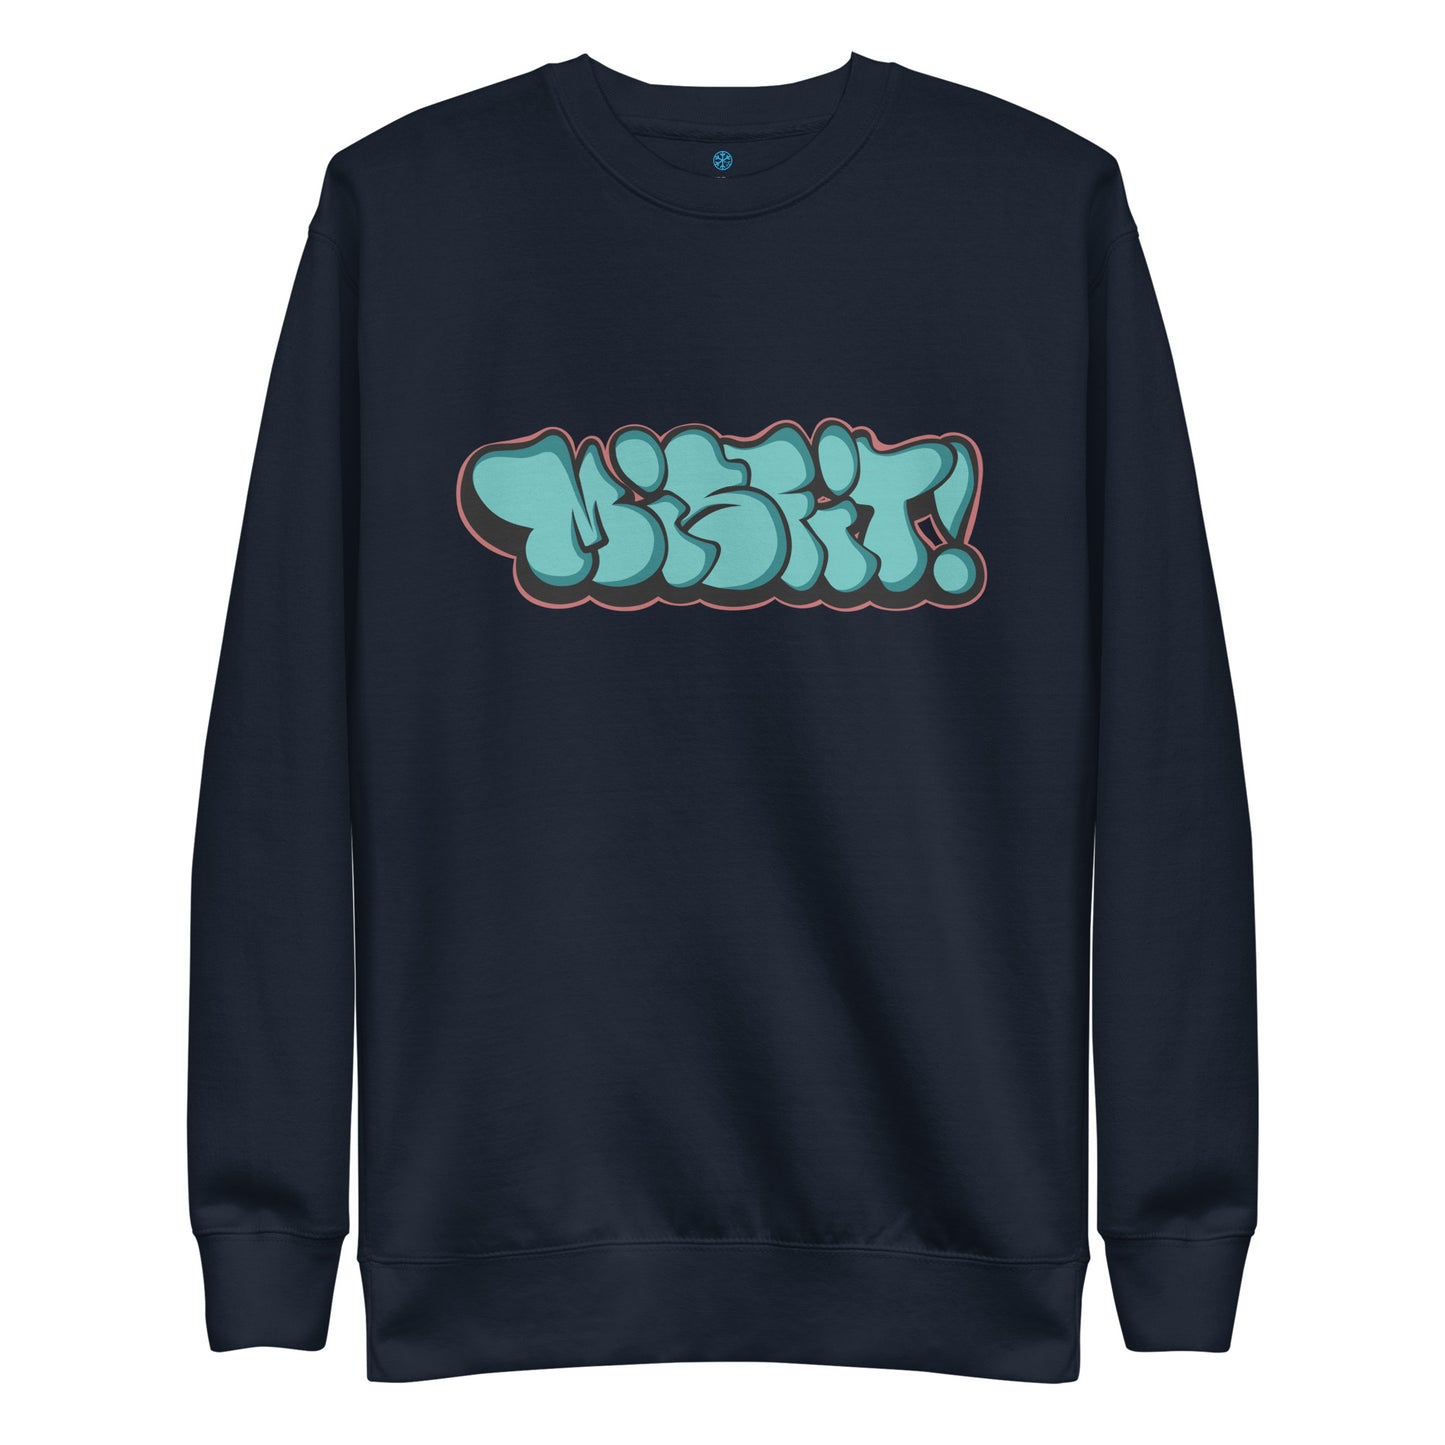 Misfit throwie sweatshirt by B.Different Clothing street art graffiti inspired streetwear brand